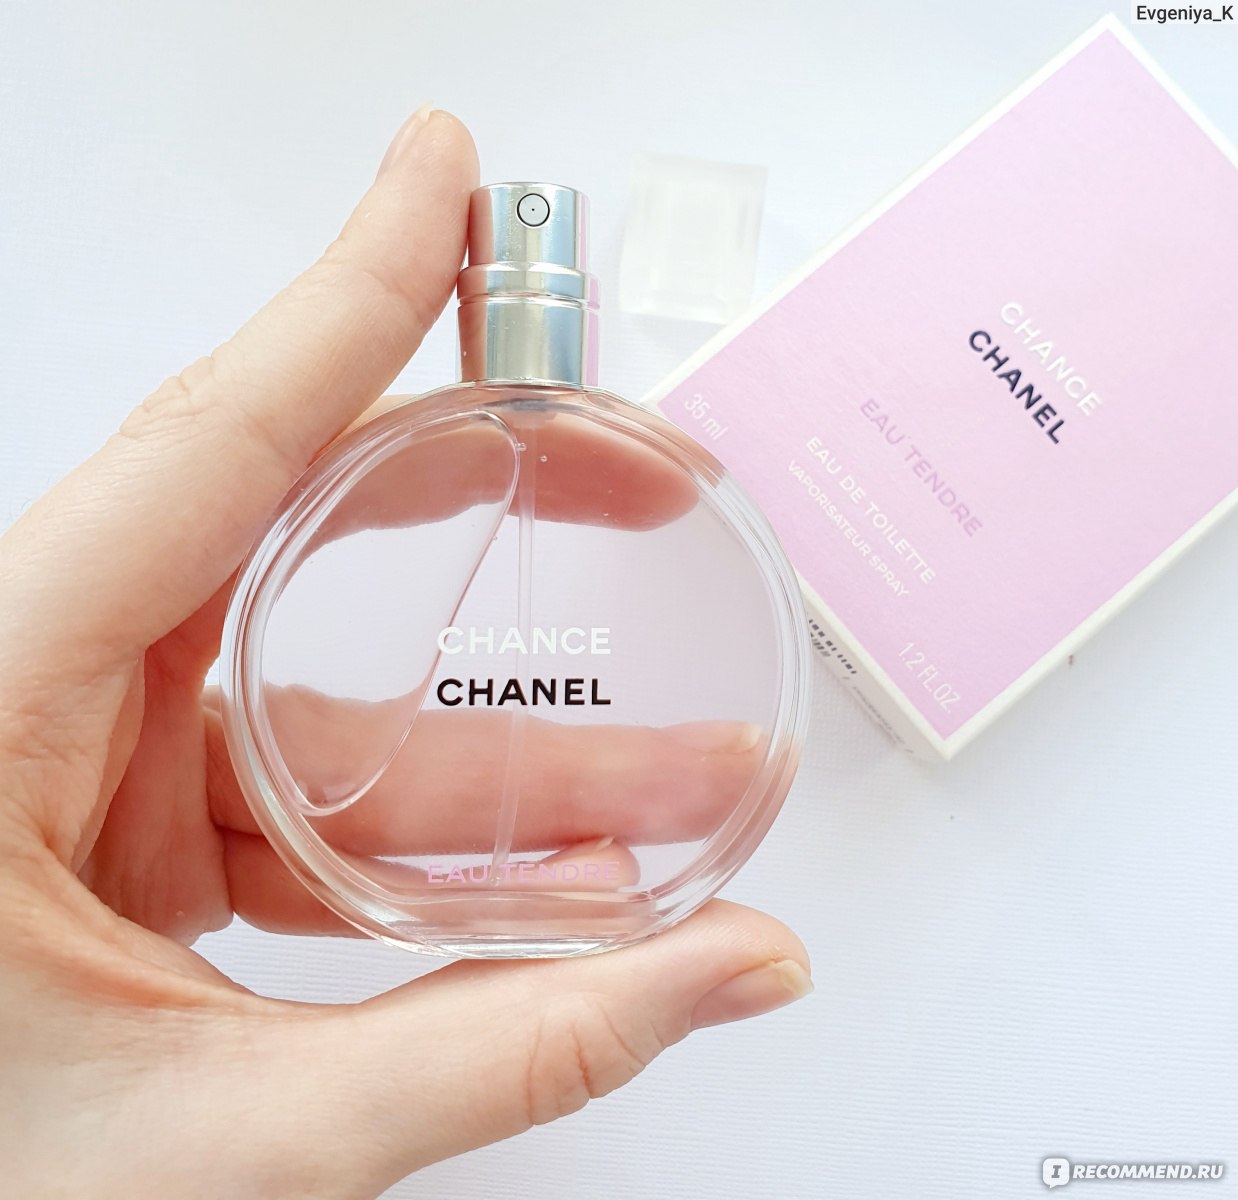 Chanel chance Eau tendre масло для тела